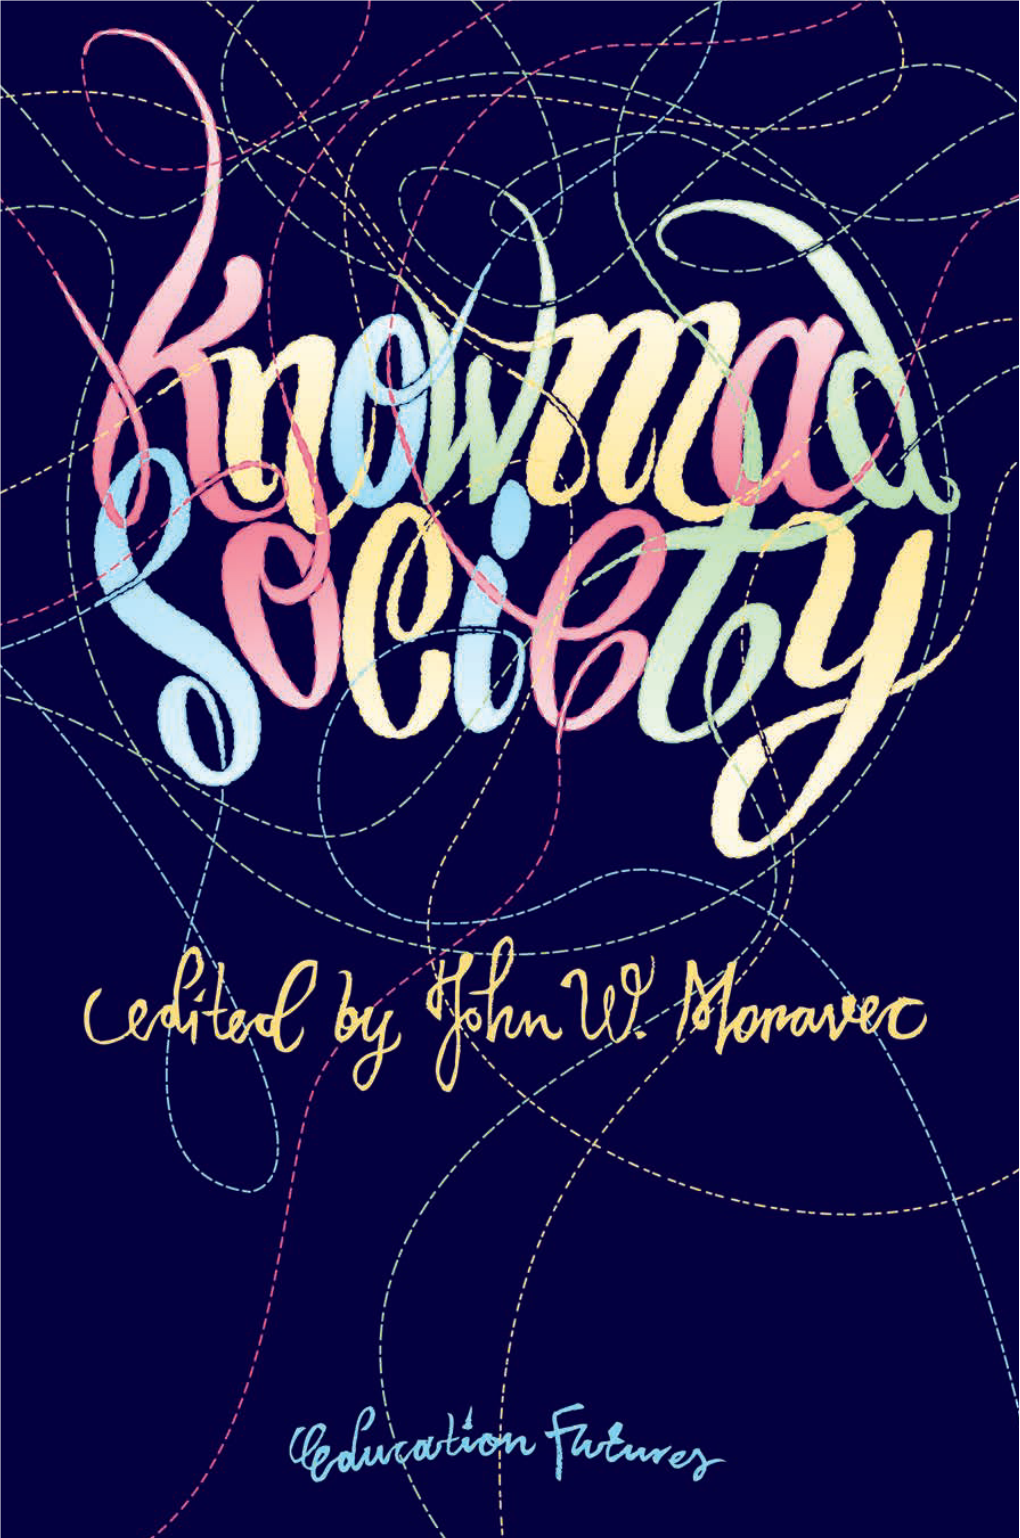 Knowmad Society JOHN W . MORAVEC